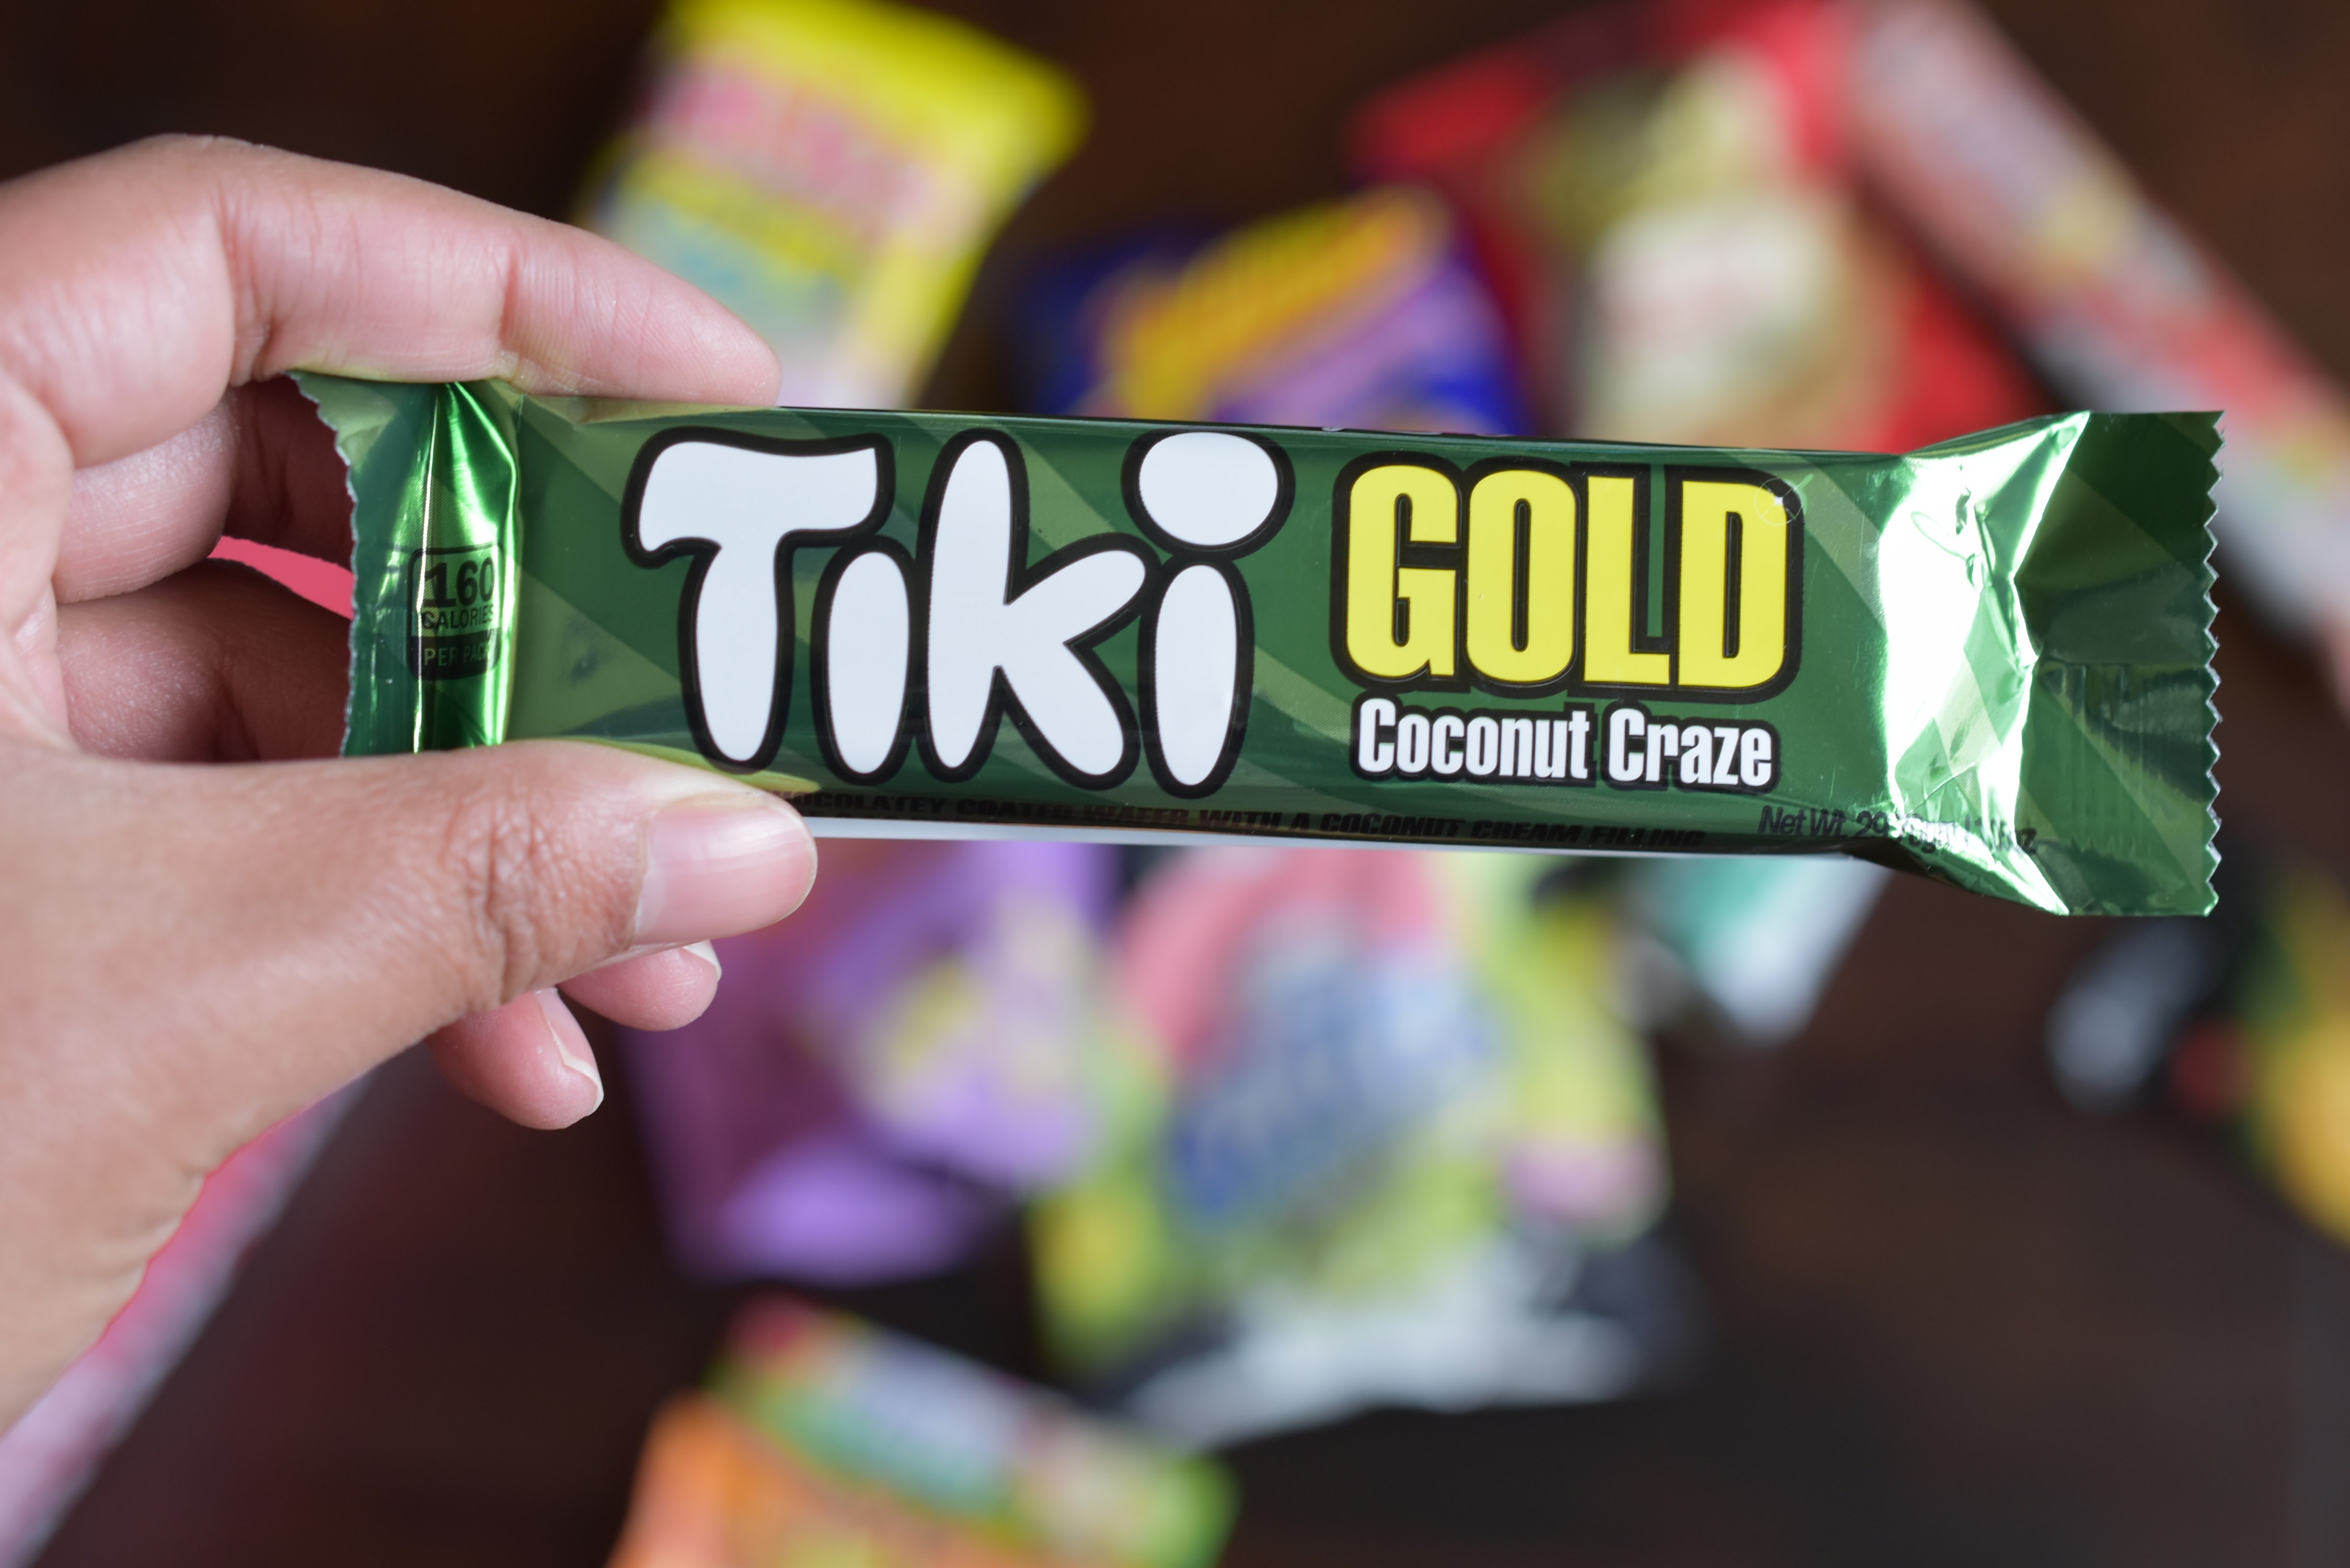 Tiki Gold Coconut Craze from Trinidad